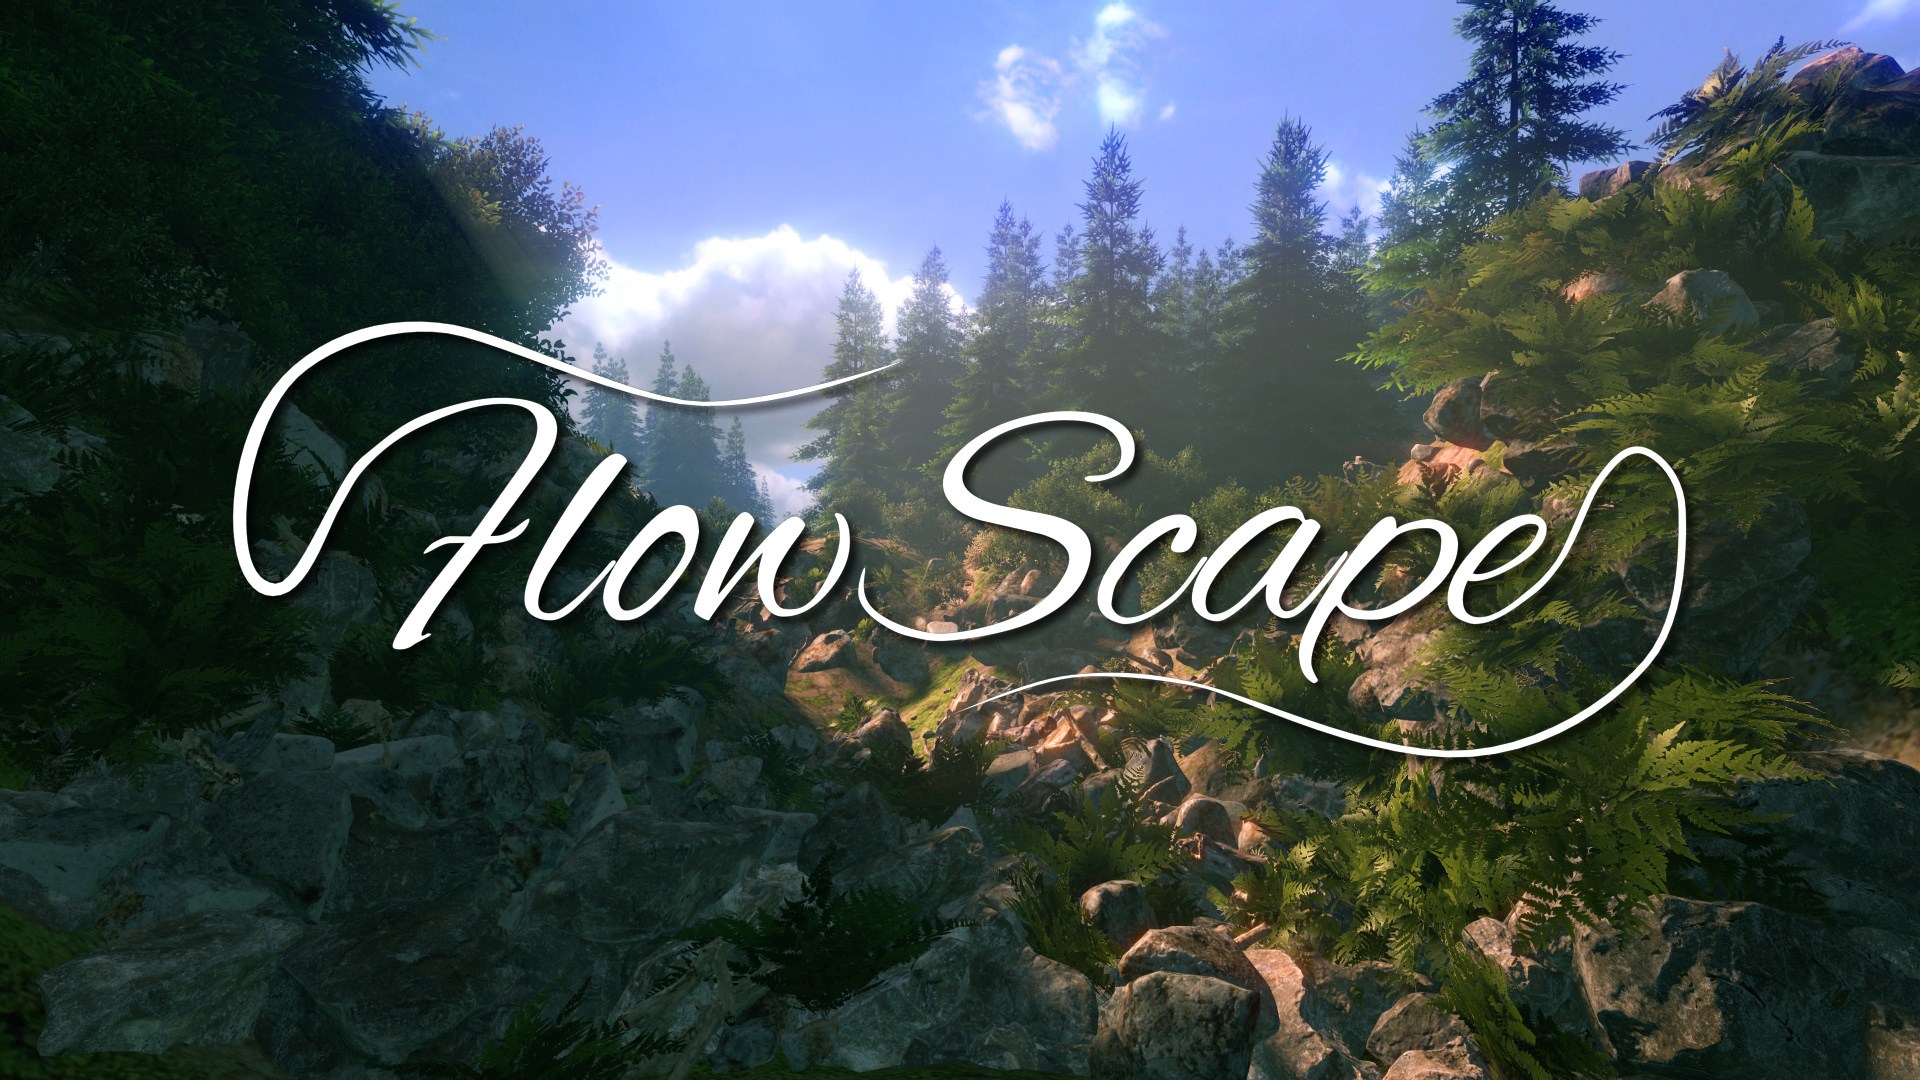 FlowScape logo